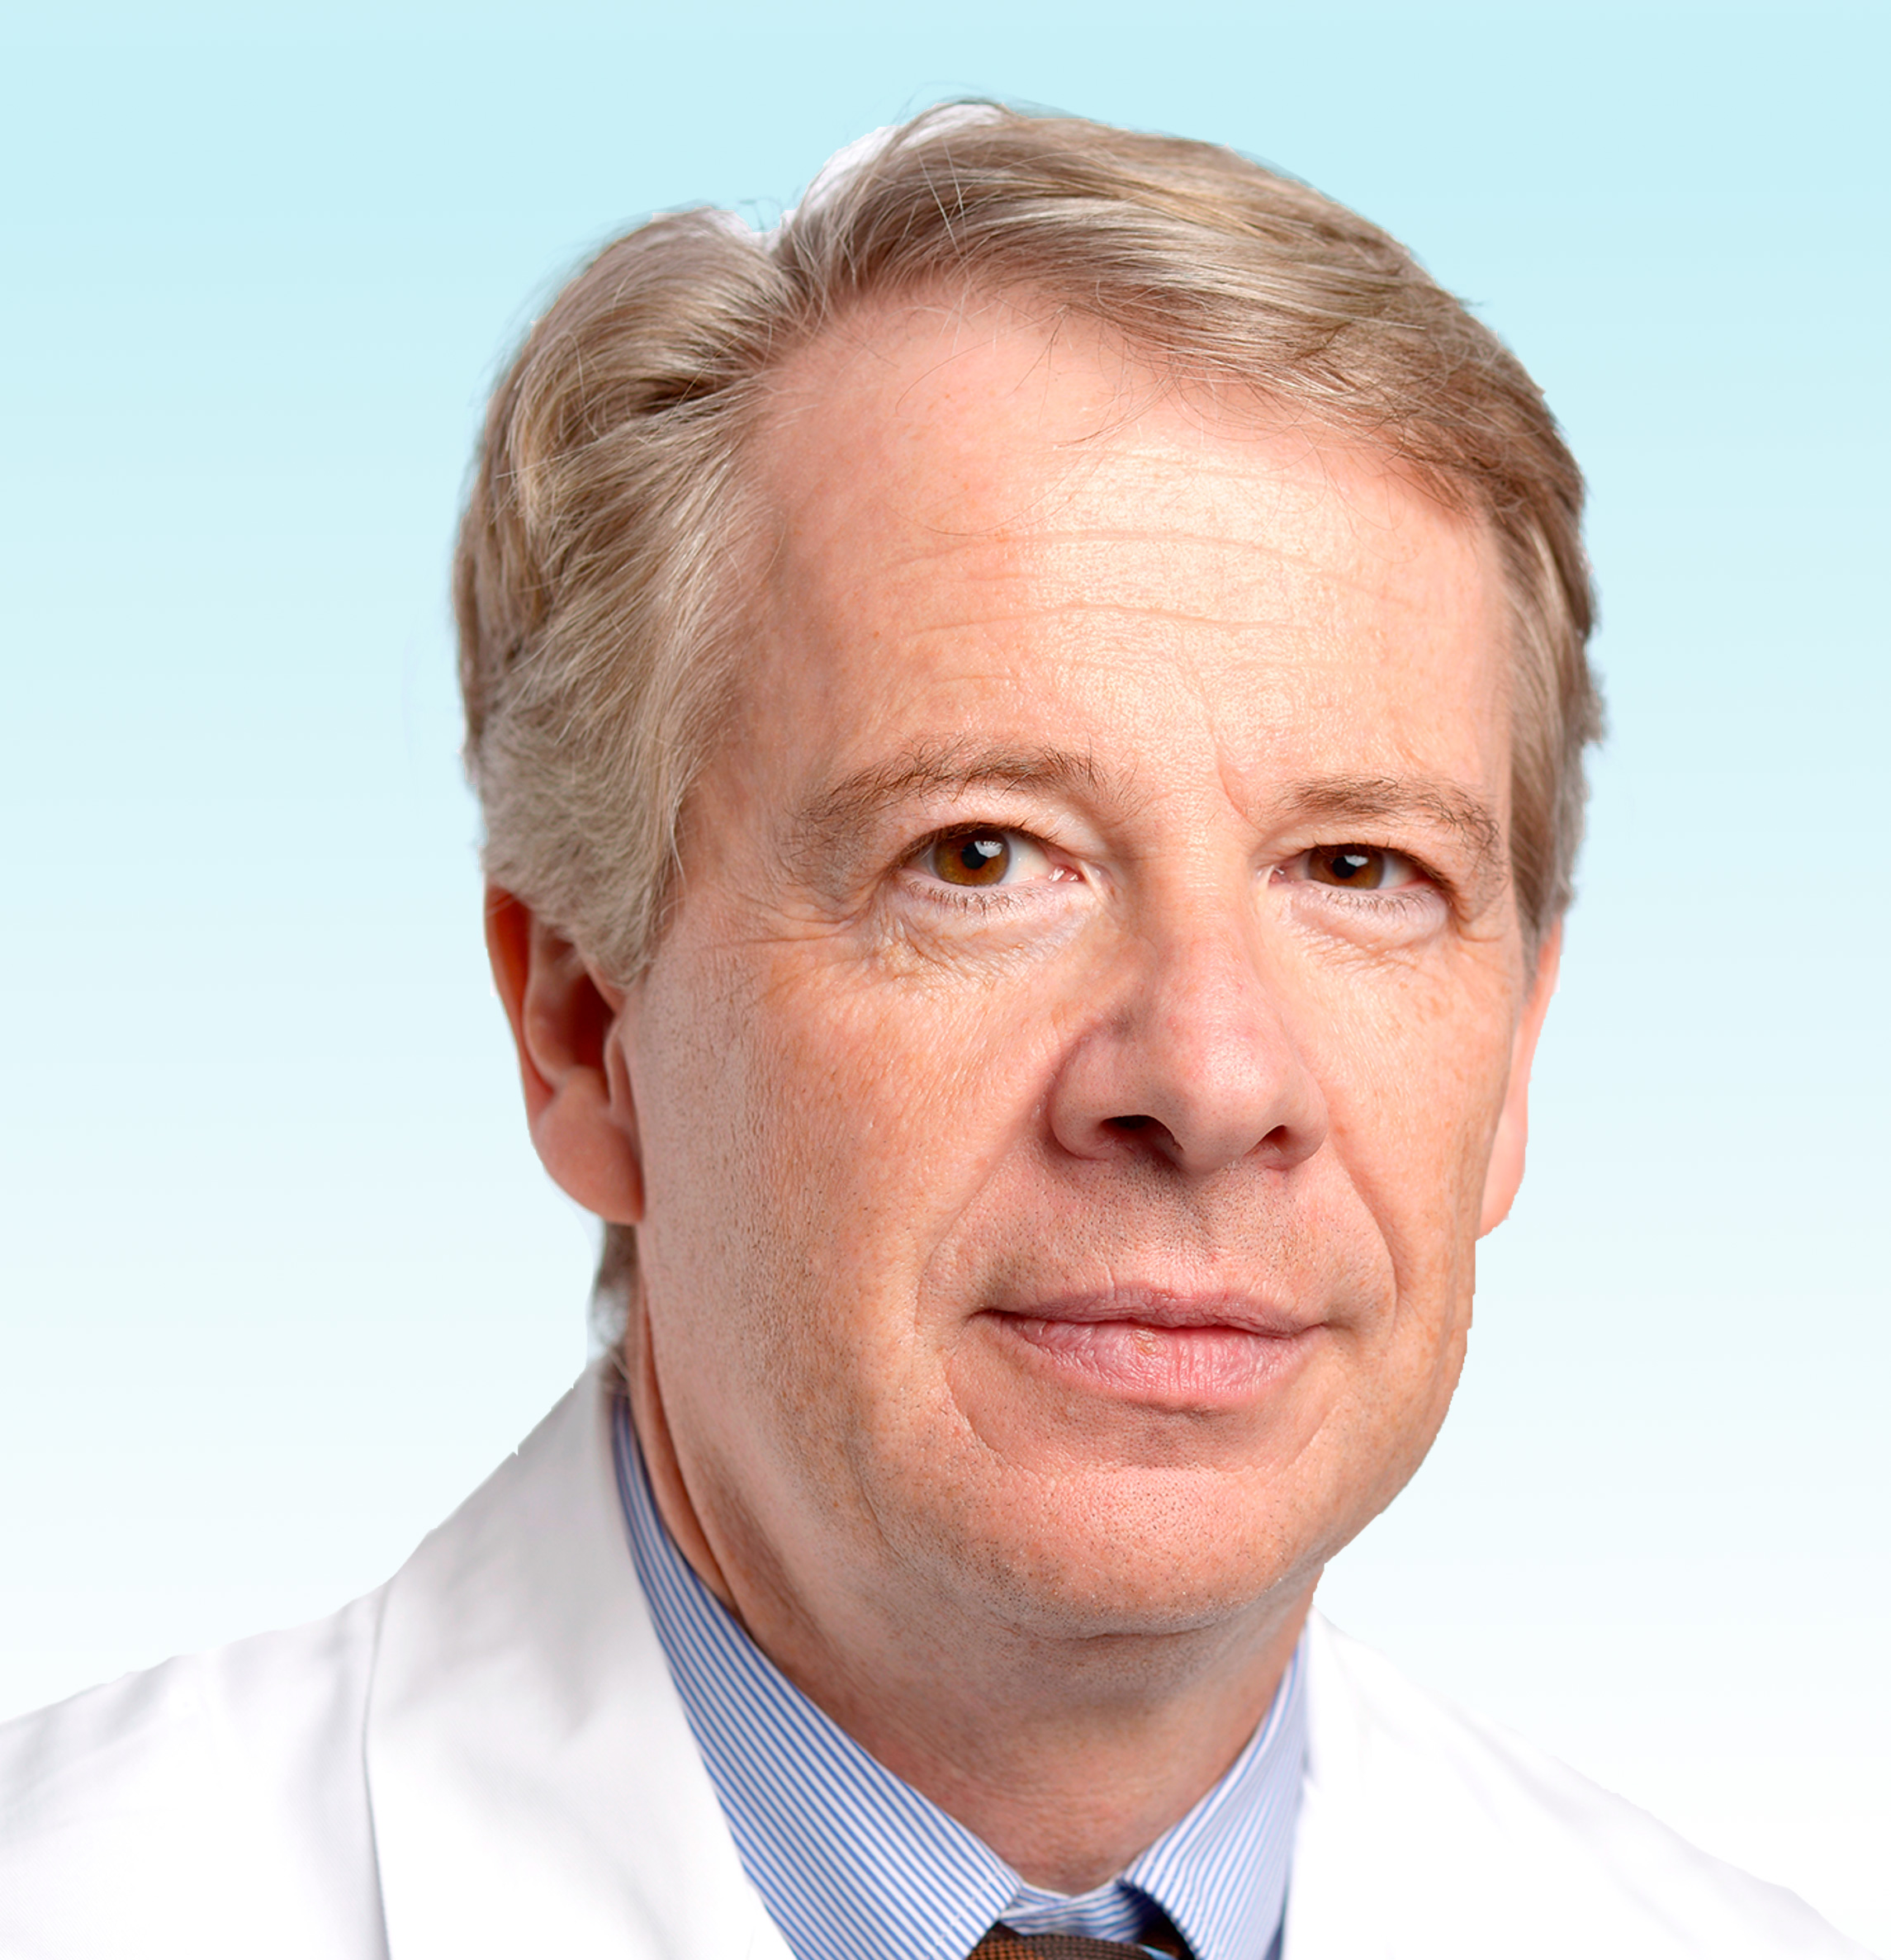 Dermatologue, Prof. Dr. med. Stephan Lautenschlager